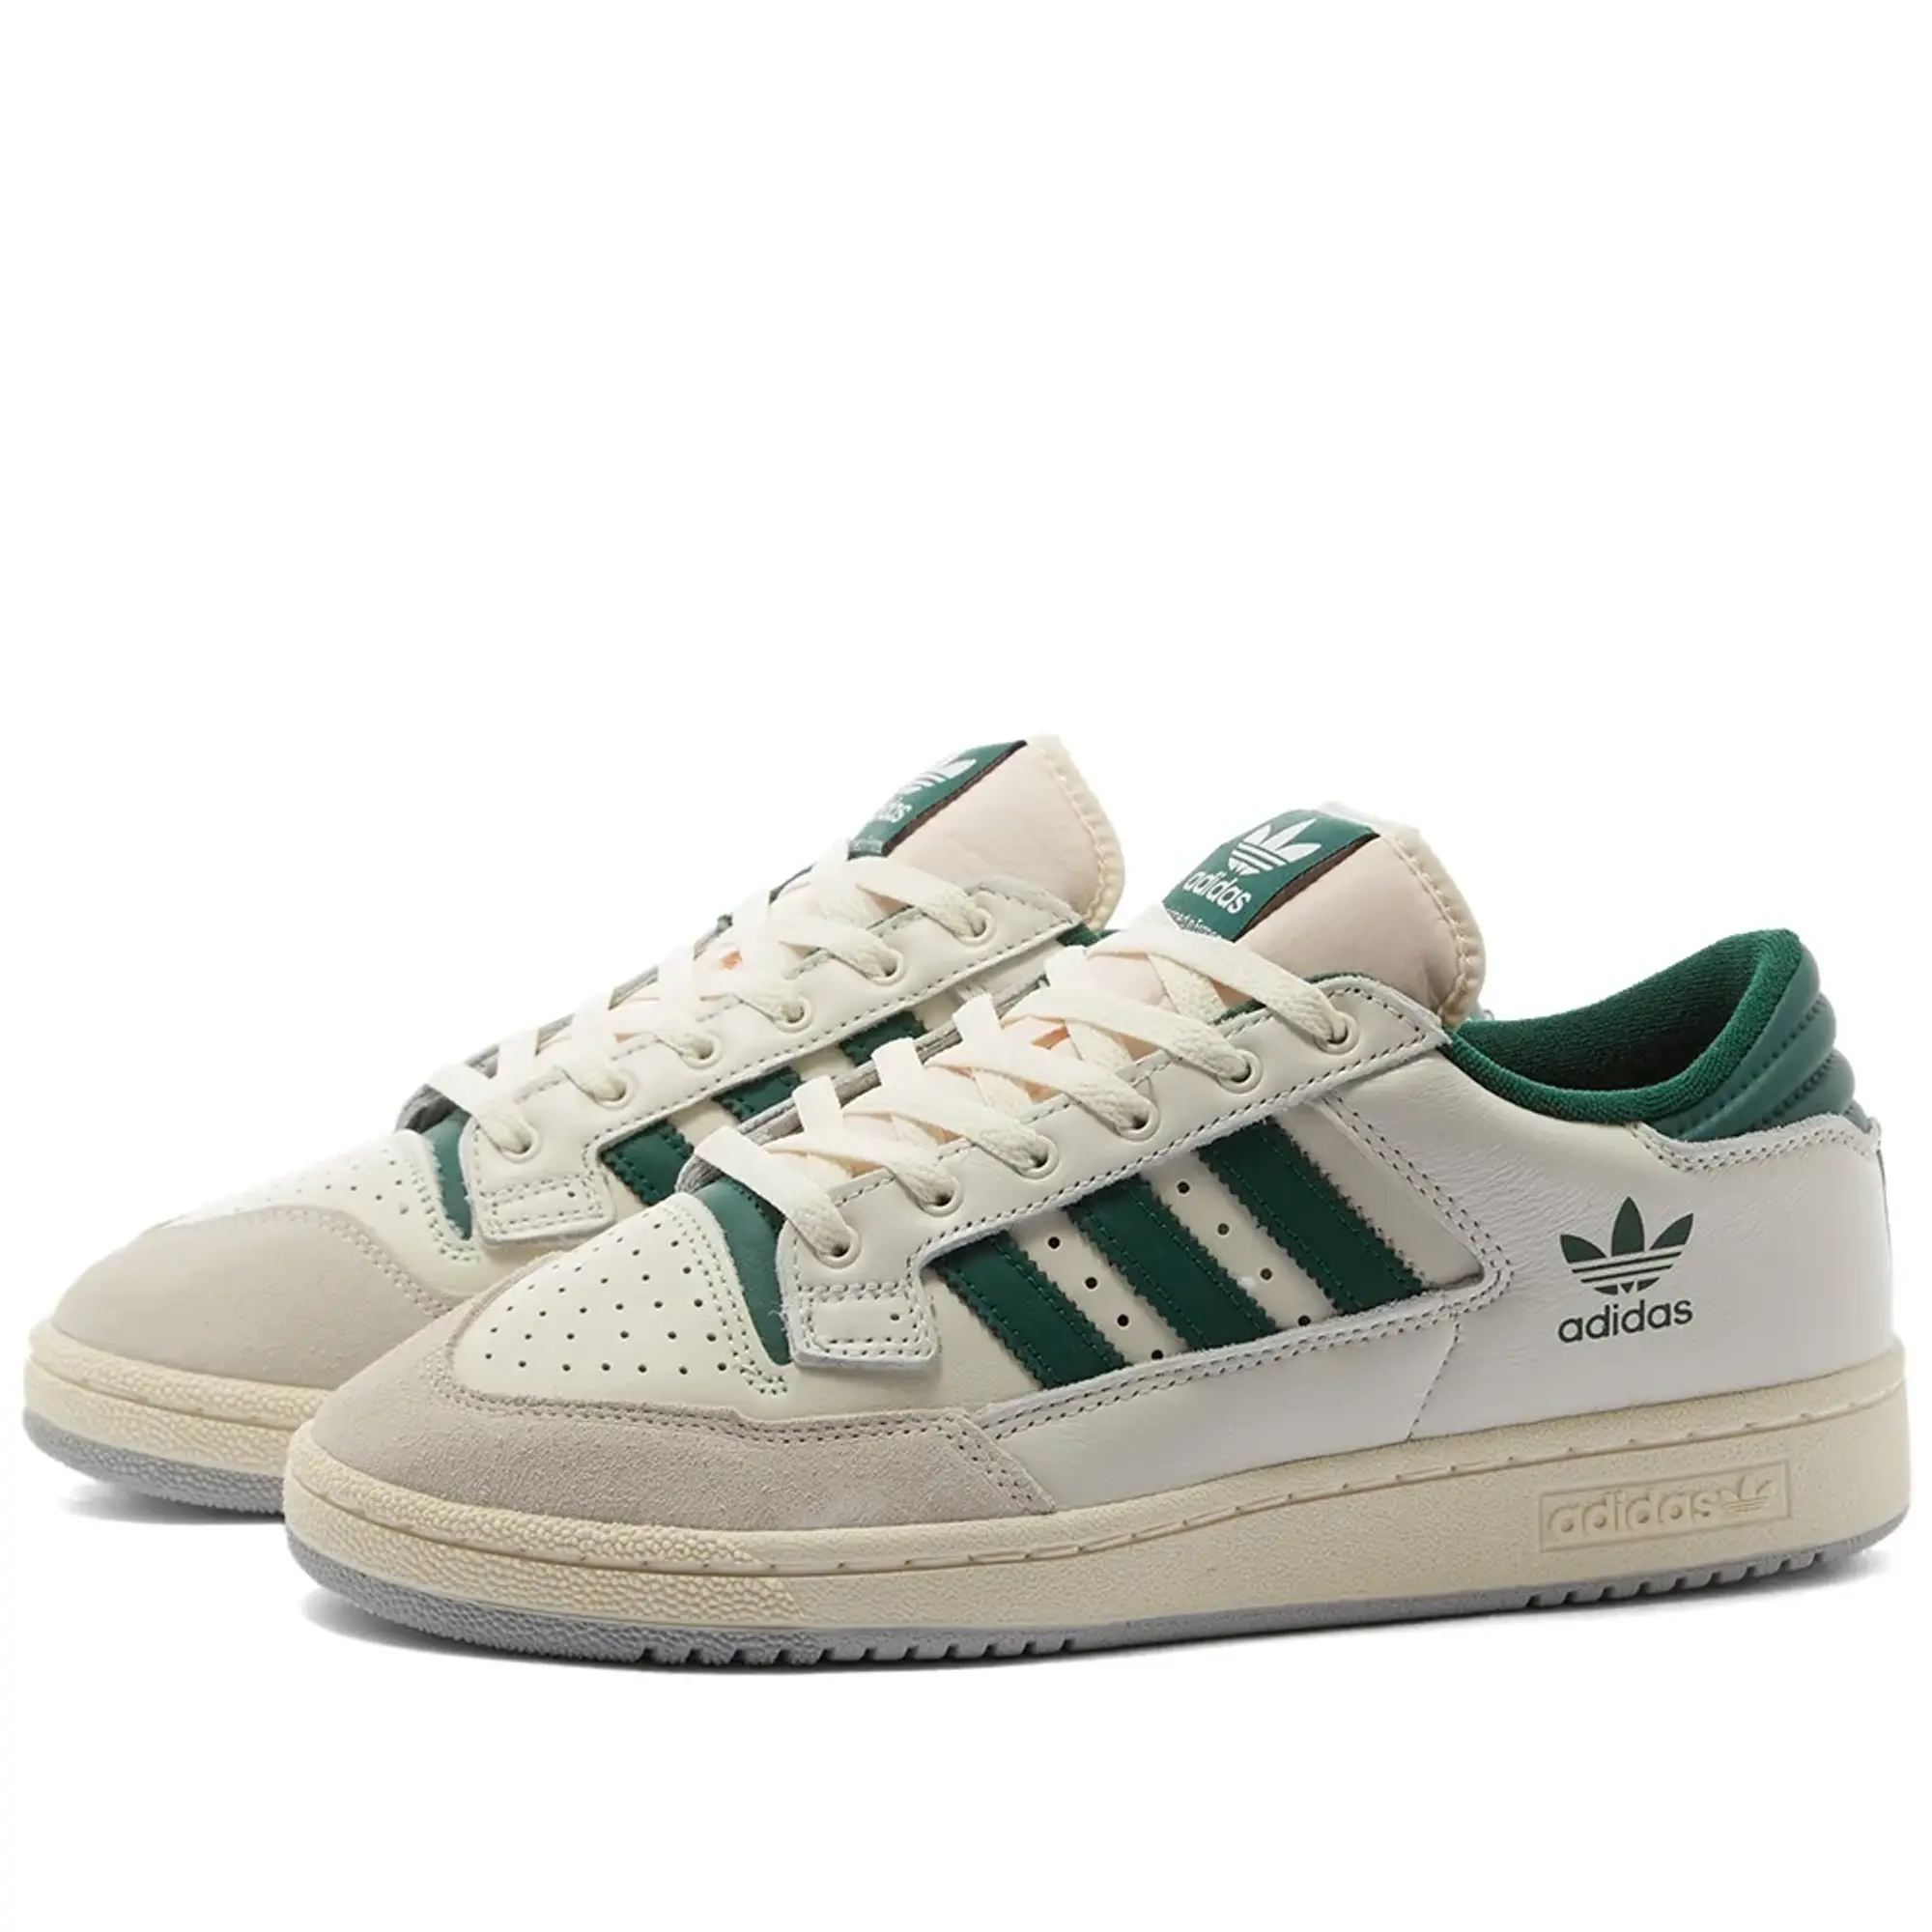 adidas Centennial 85 Low White Green